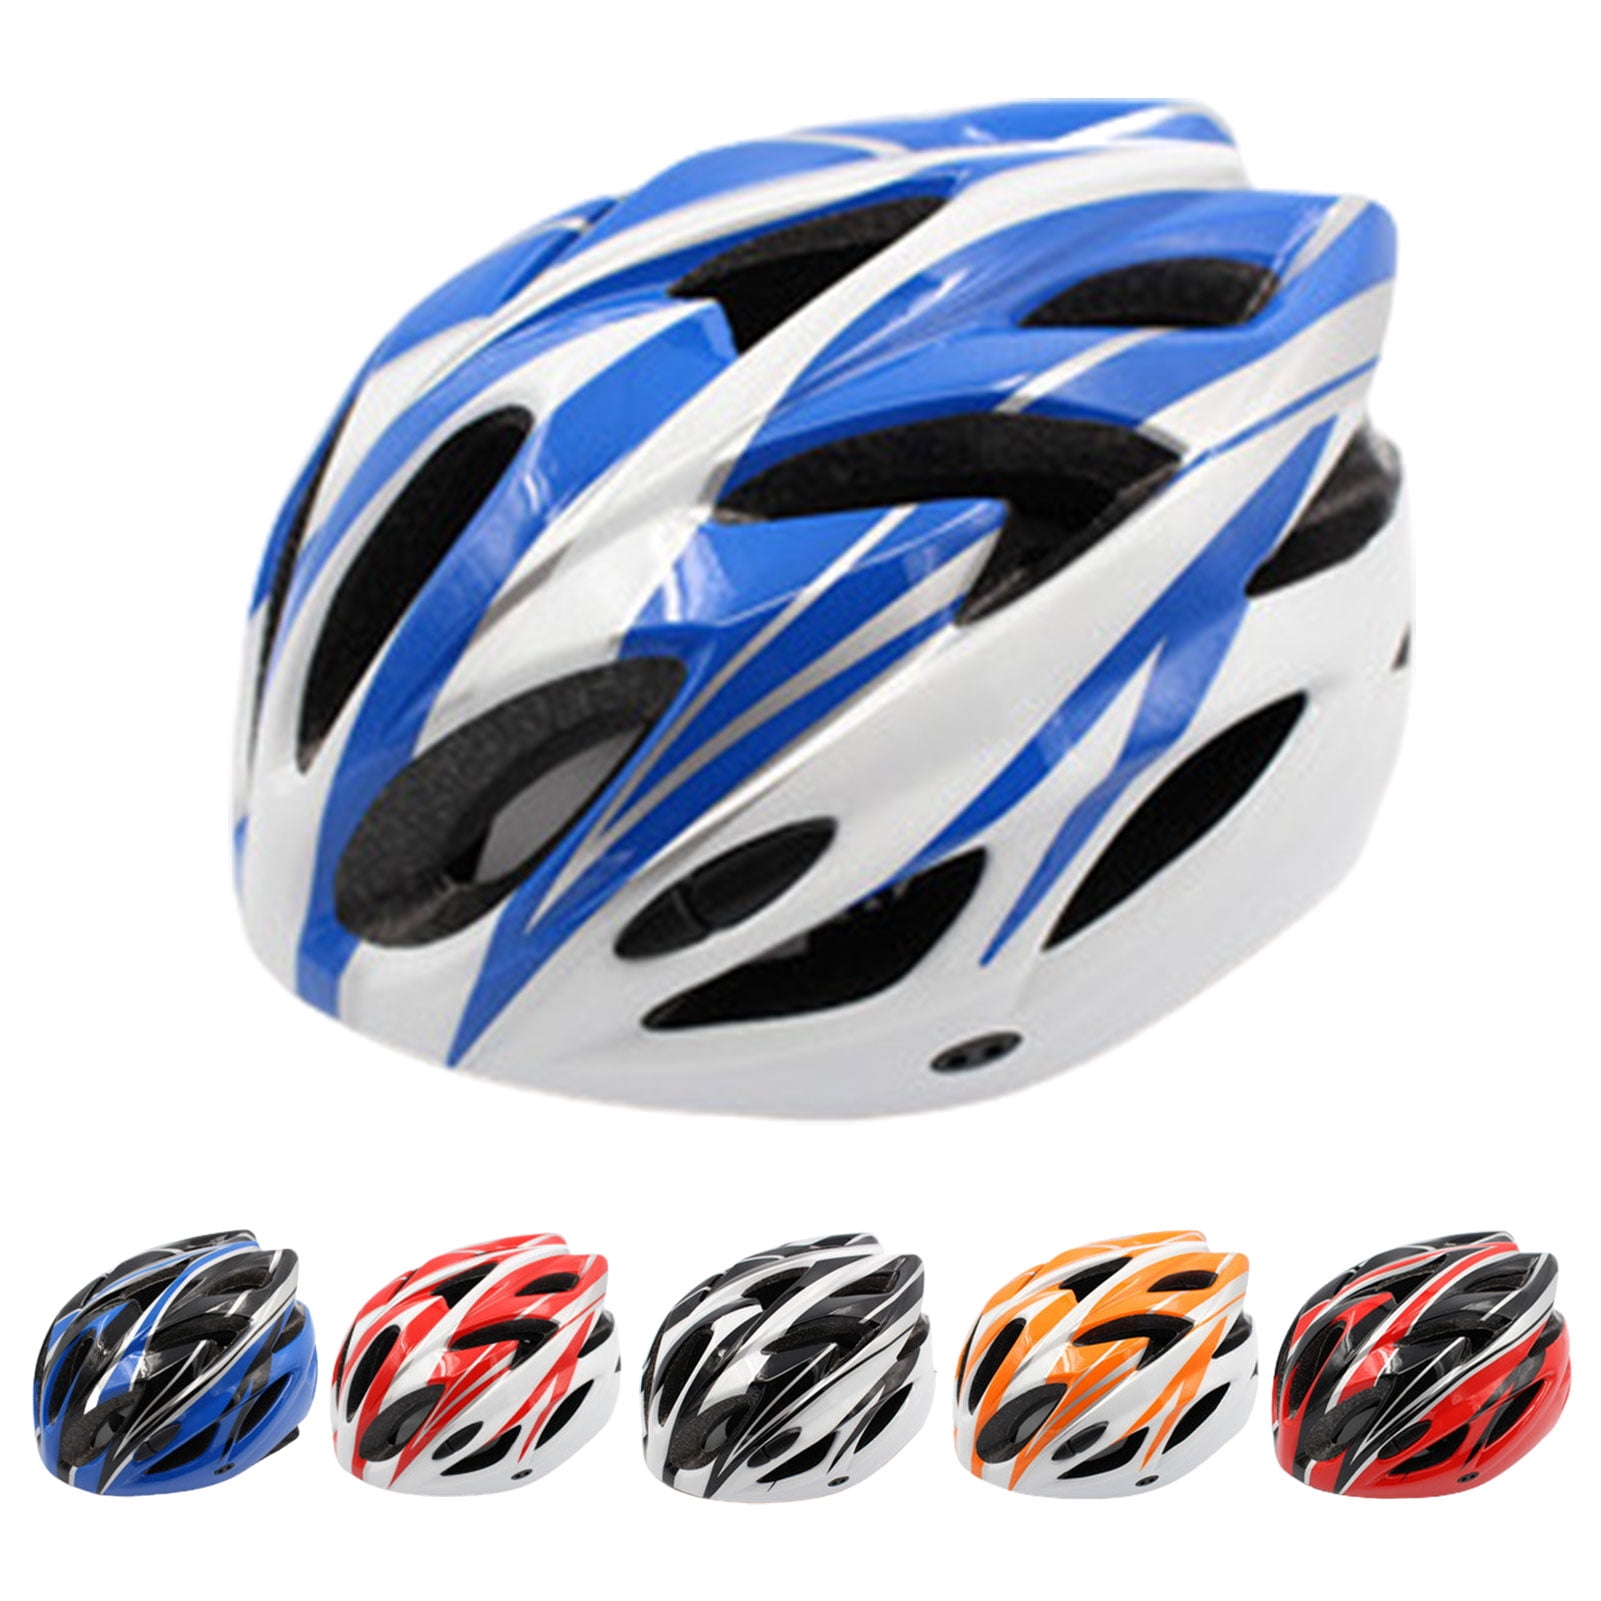 Adult Cycling Helmet Professional Road Bike MTB BMX Safety Cap Adjustable Bicycle Helmets